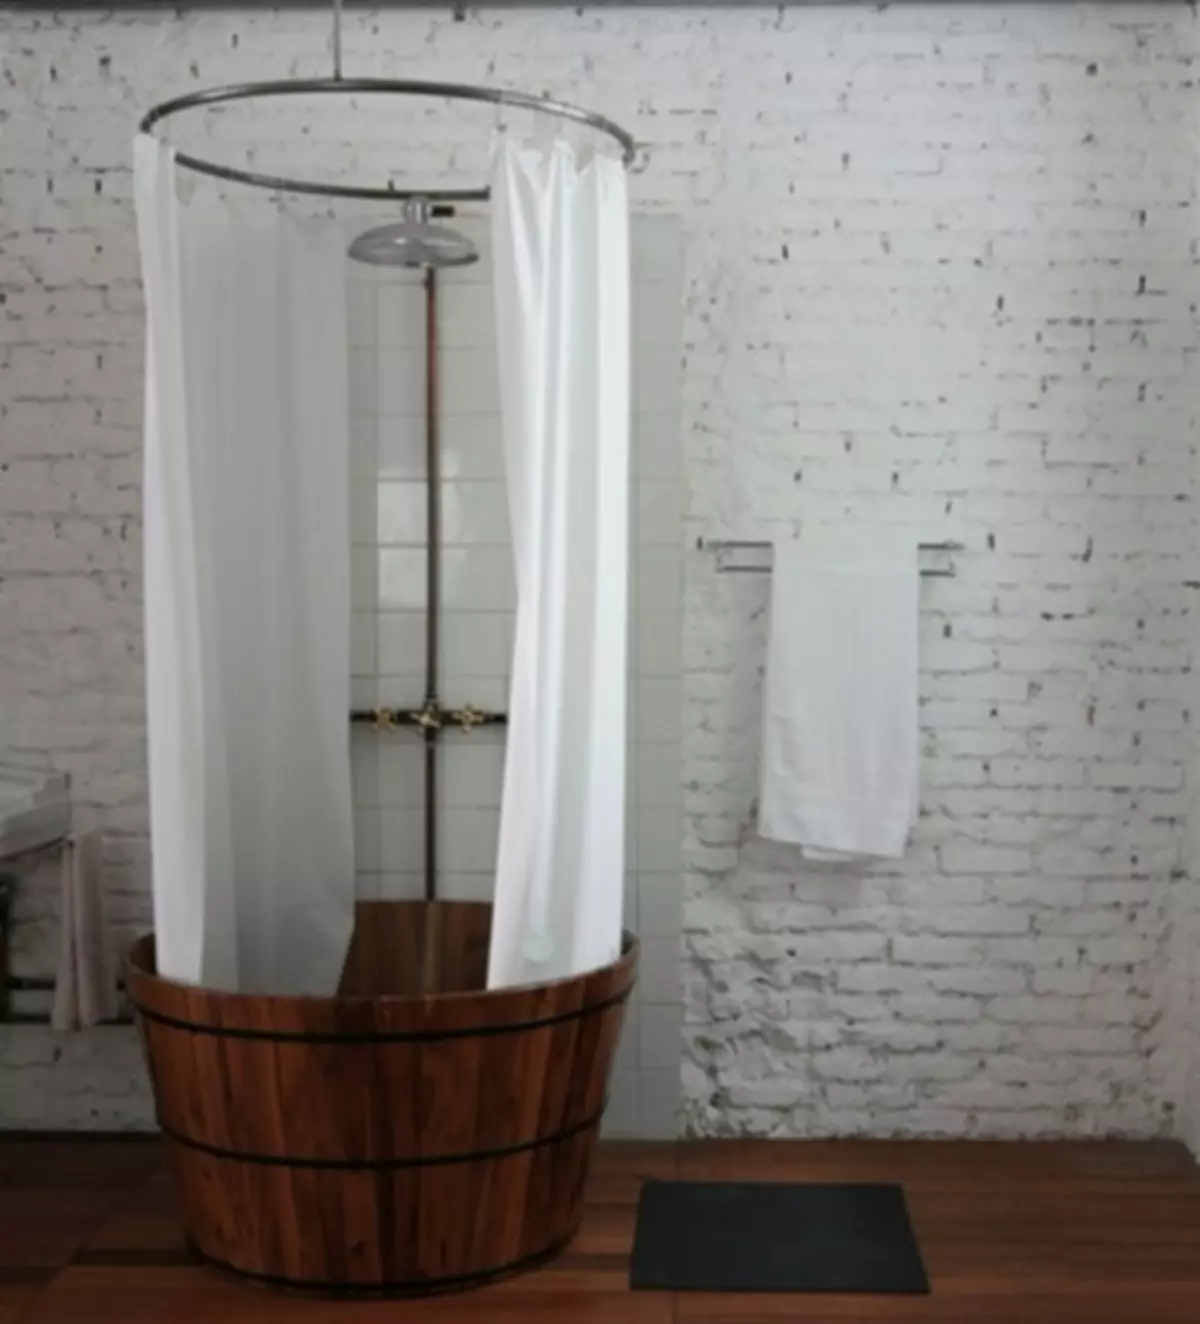 Cabina de dutxa en una casa de fusta